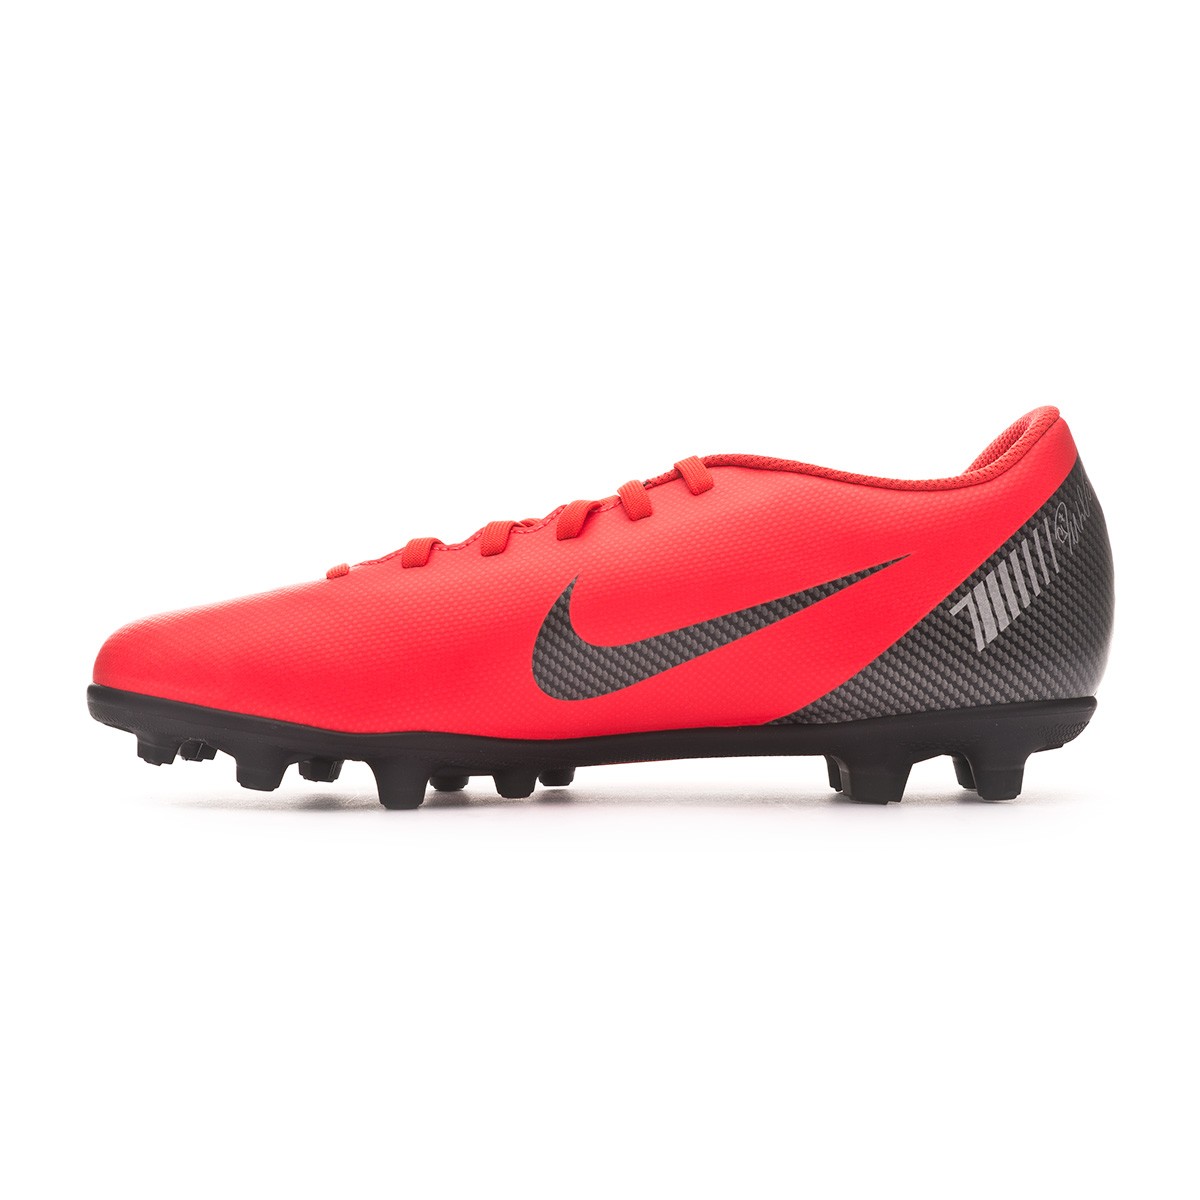 Cristiano Ronaldo Nike Superfly 5 CR7 Football Boots Test .